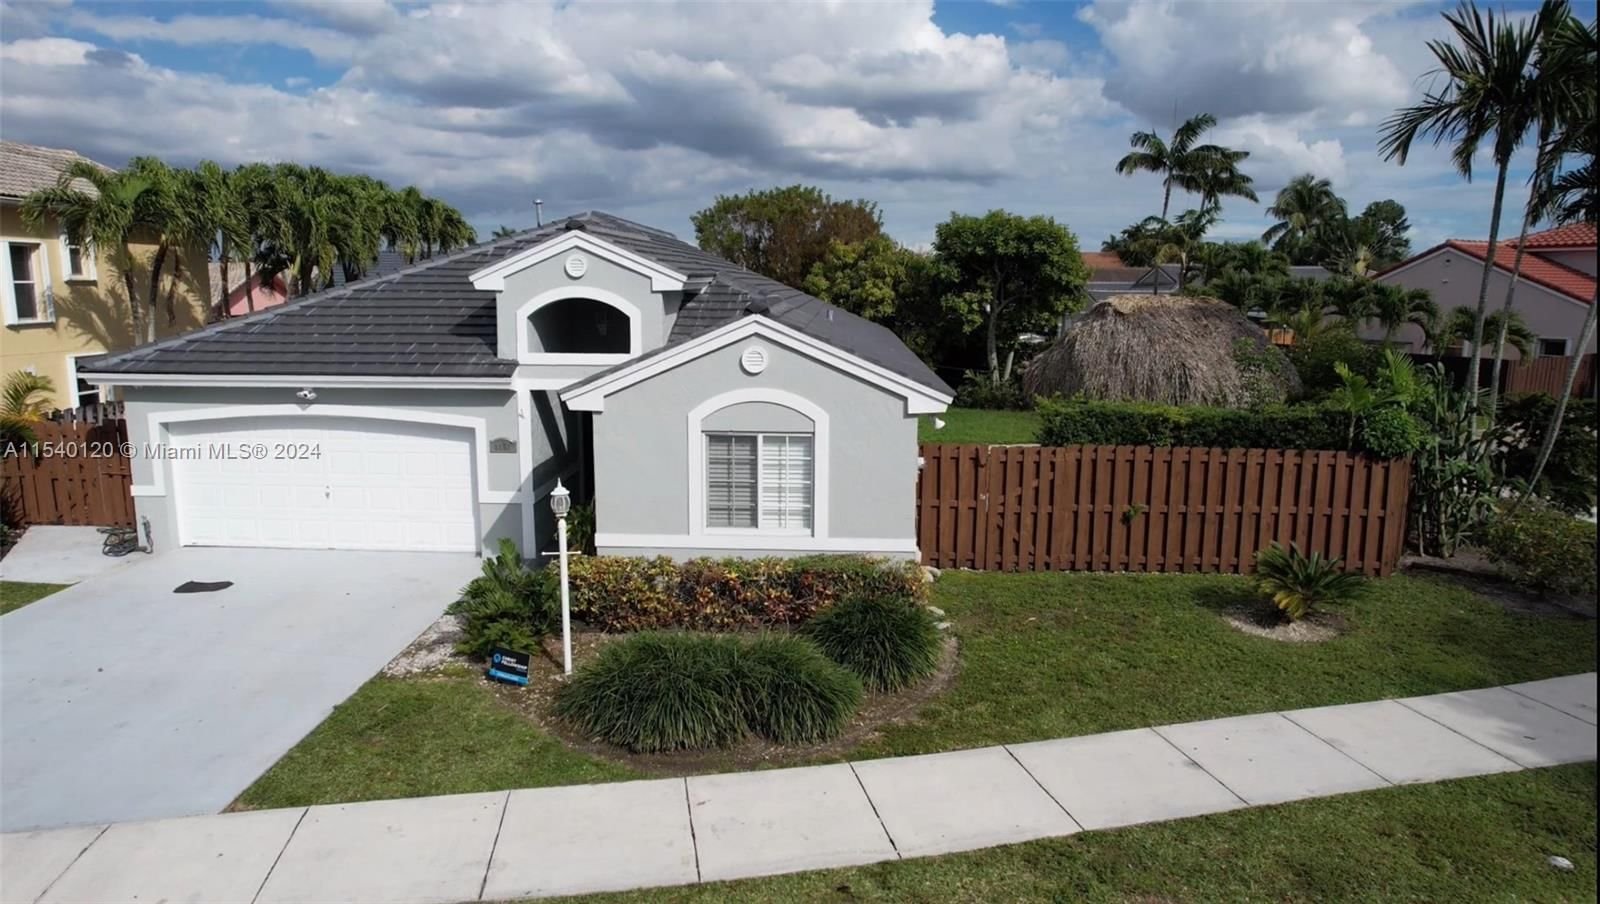 Real estate property located at 8151 160th Ave, Miami-Dade County, LAGO MAR SOUTH, Miami, FL